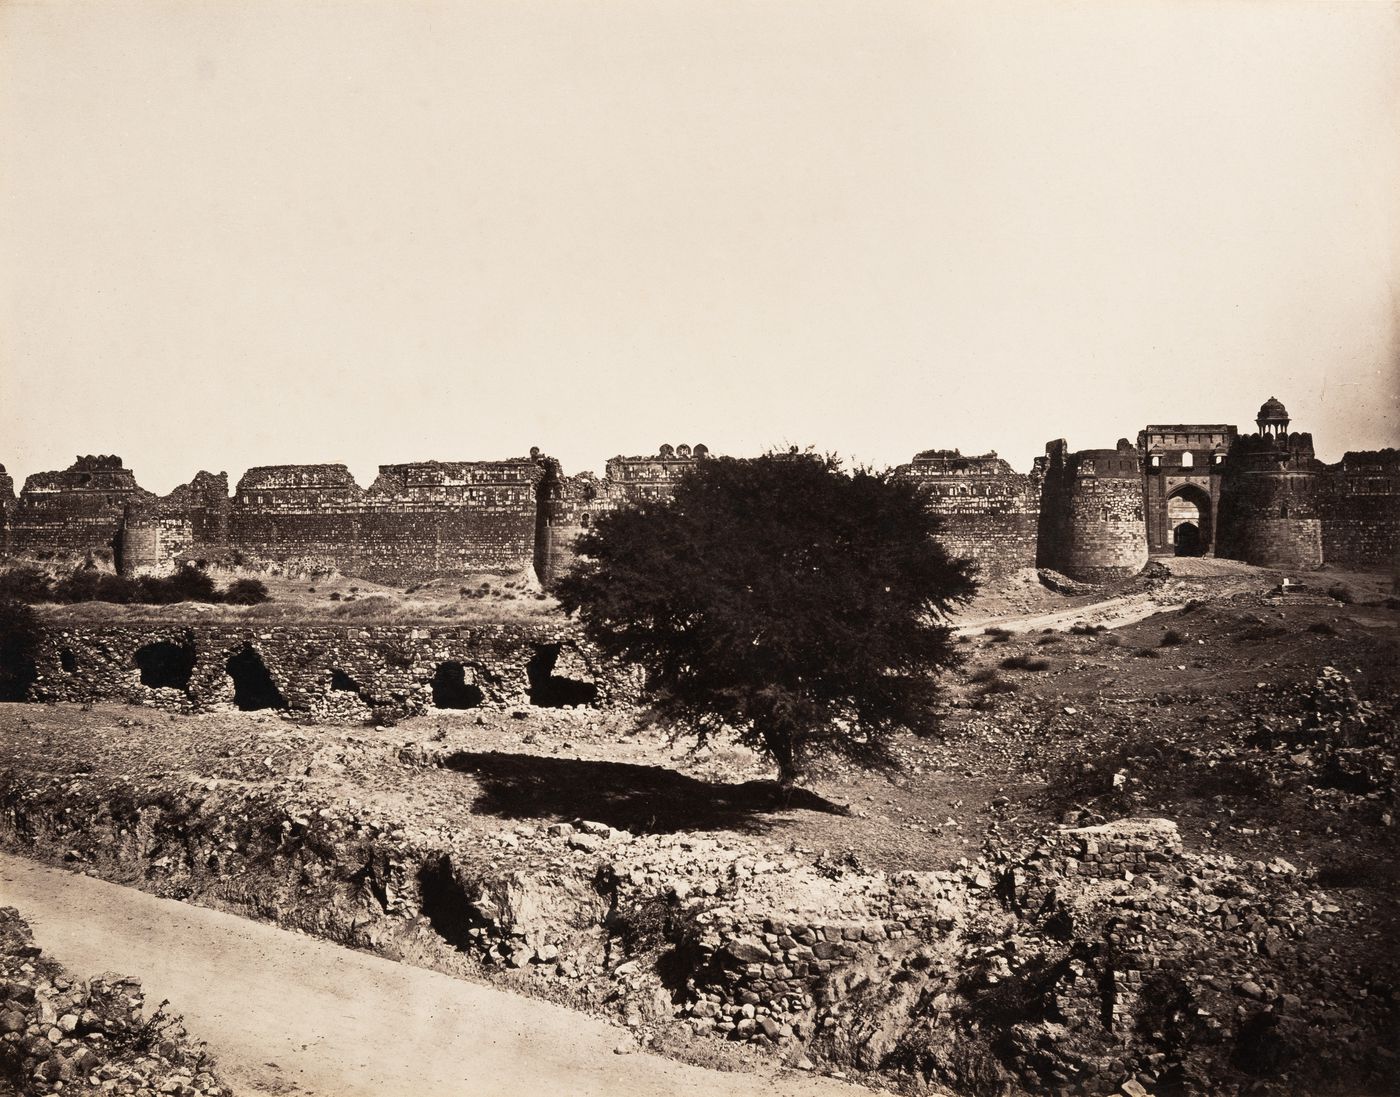 View of the Purana Qila [Old Fort], Delhi (now Delhi Union Territory], India